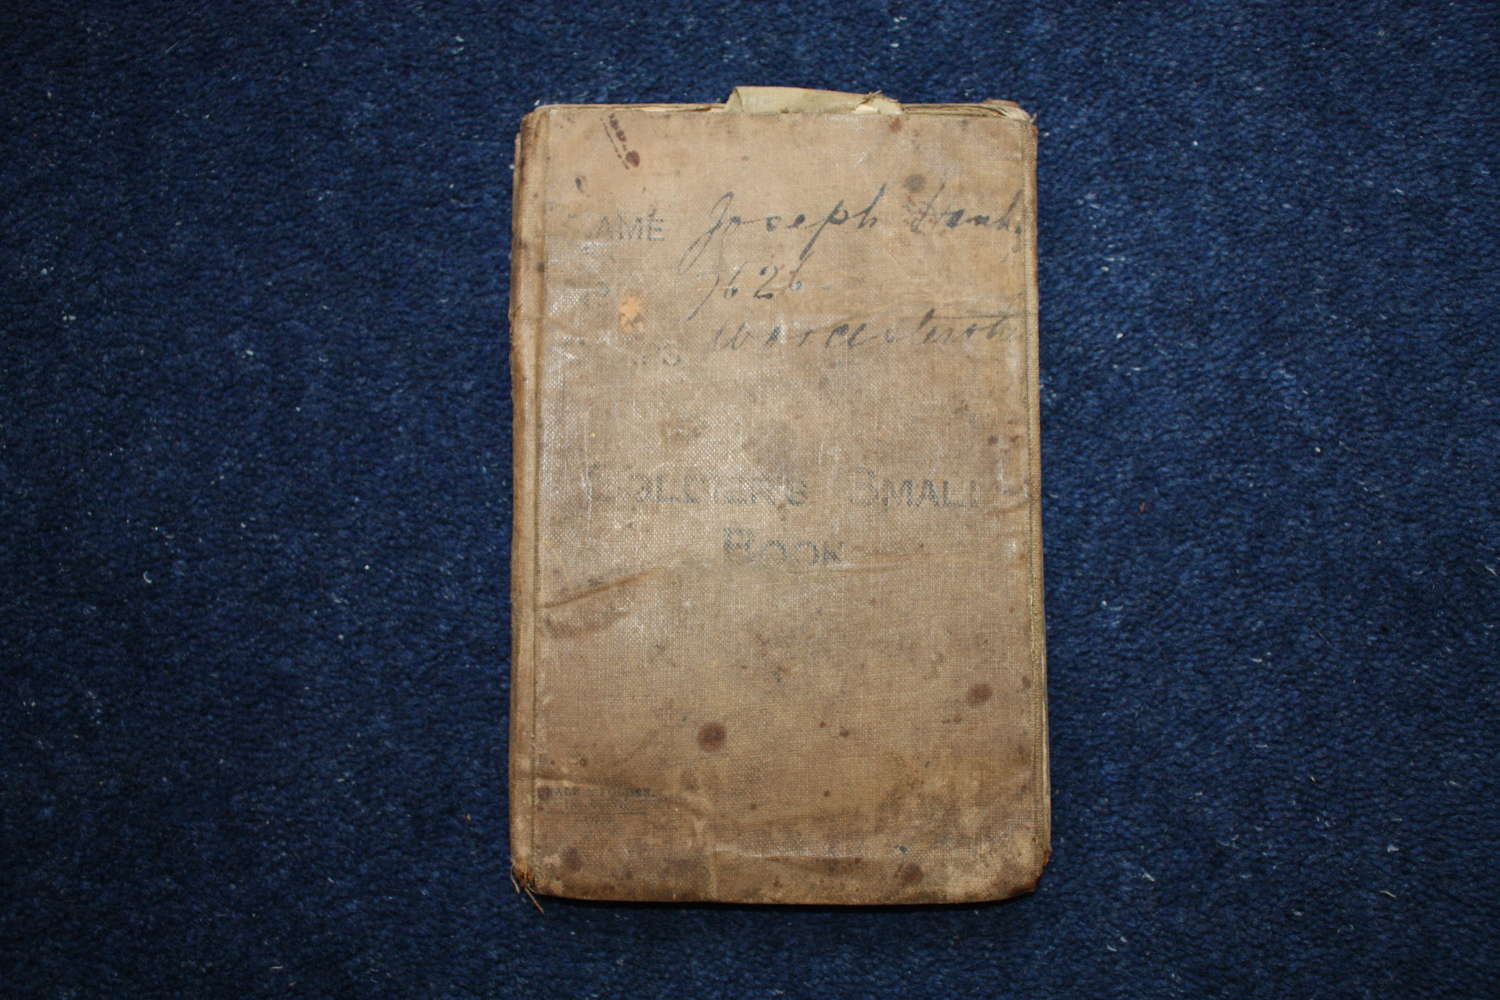 WW1 BRITISH ARMY SOLDIERS SMALL BOOK JOSEPH HANKS KIA WORC REGIMENT